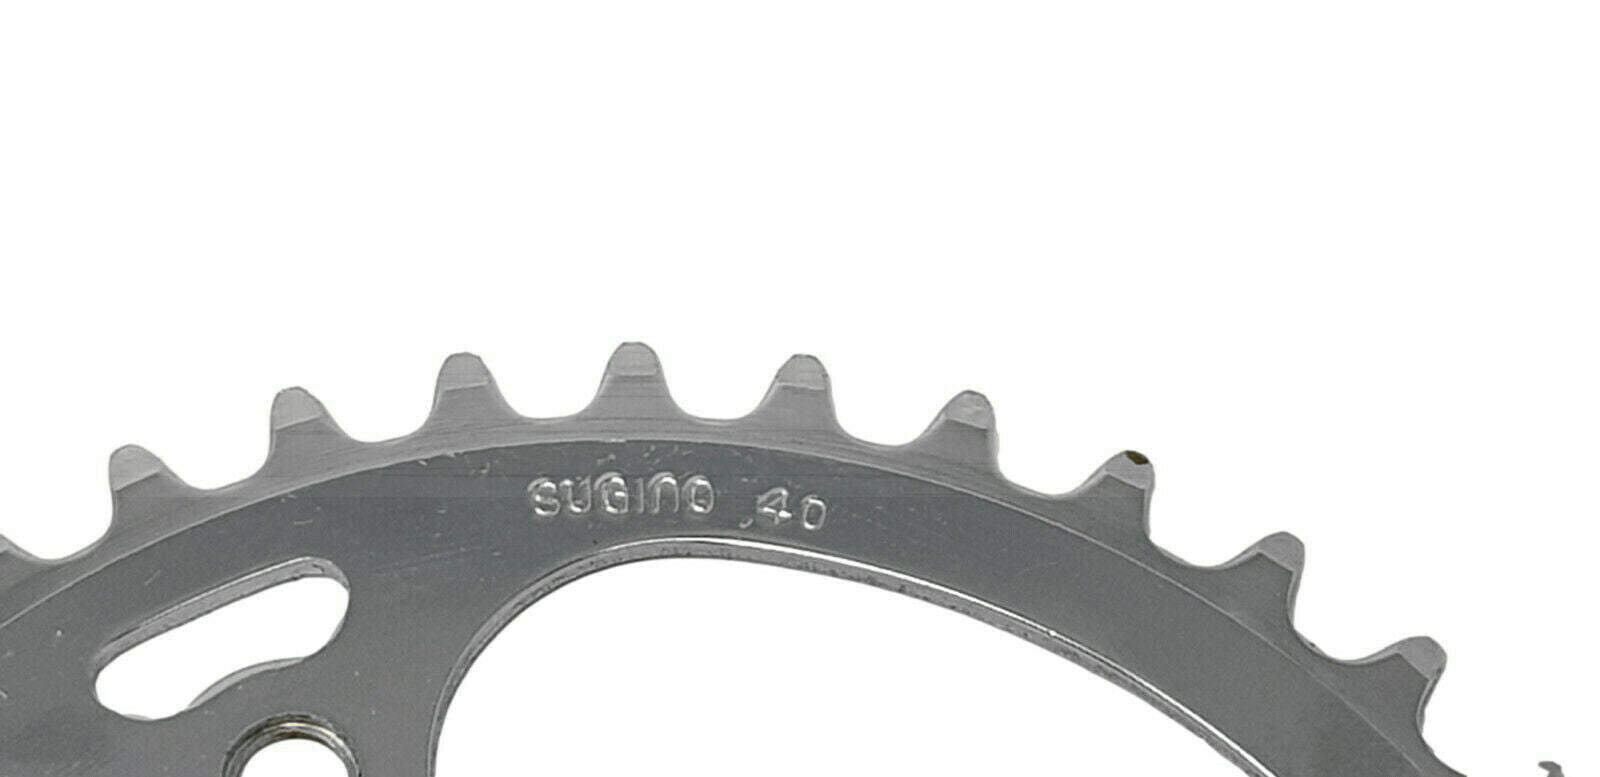 Sugino 3 Bolt 40T Chainring - 106mm BCD - Silver - Sportandleisure.com (6968126242970)